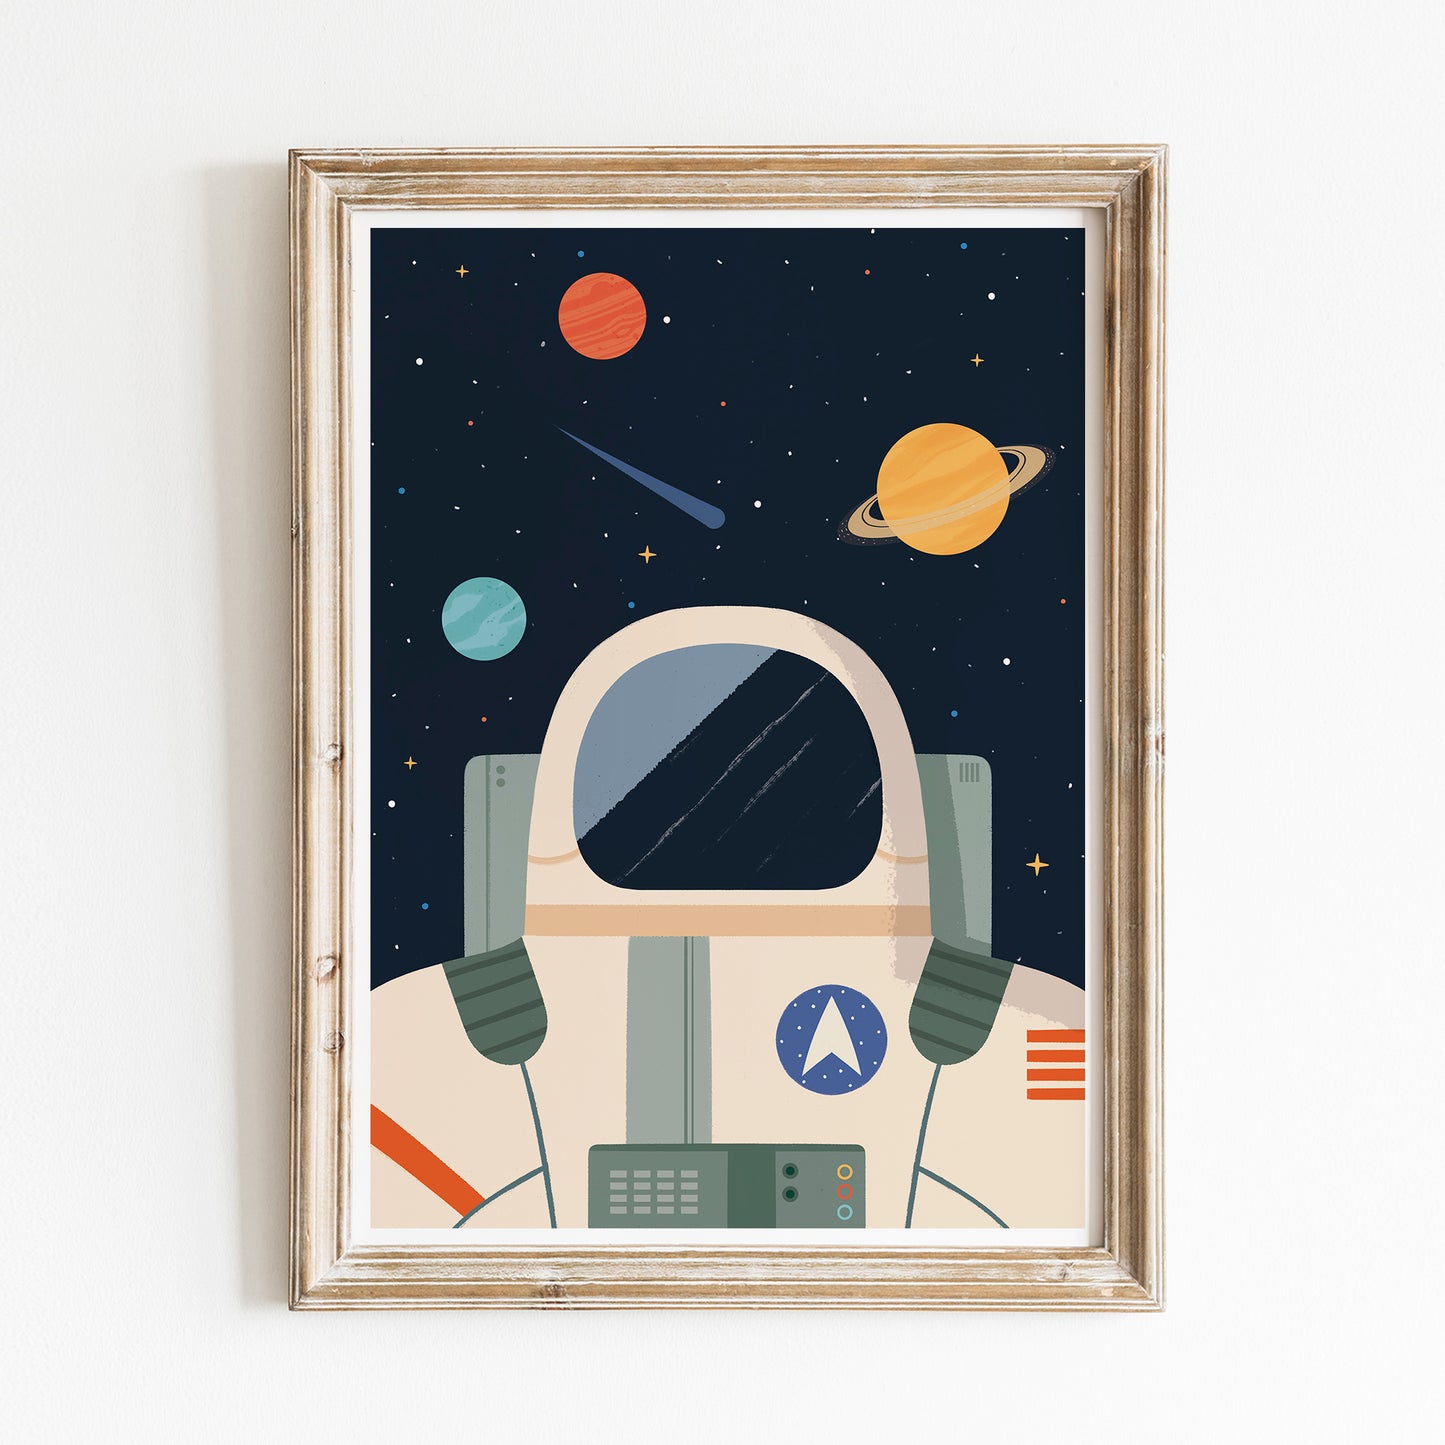 Space themed art - Set of three prints